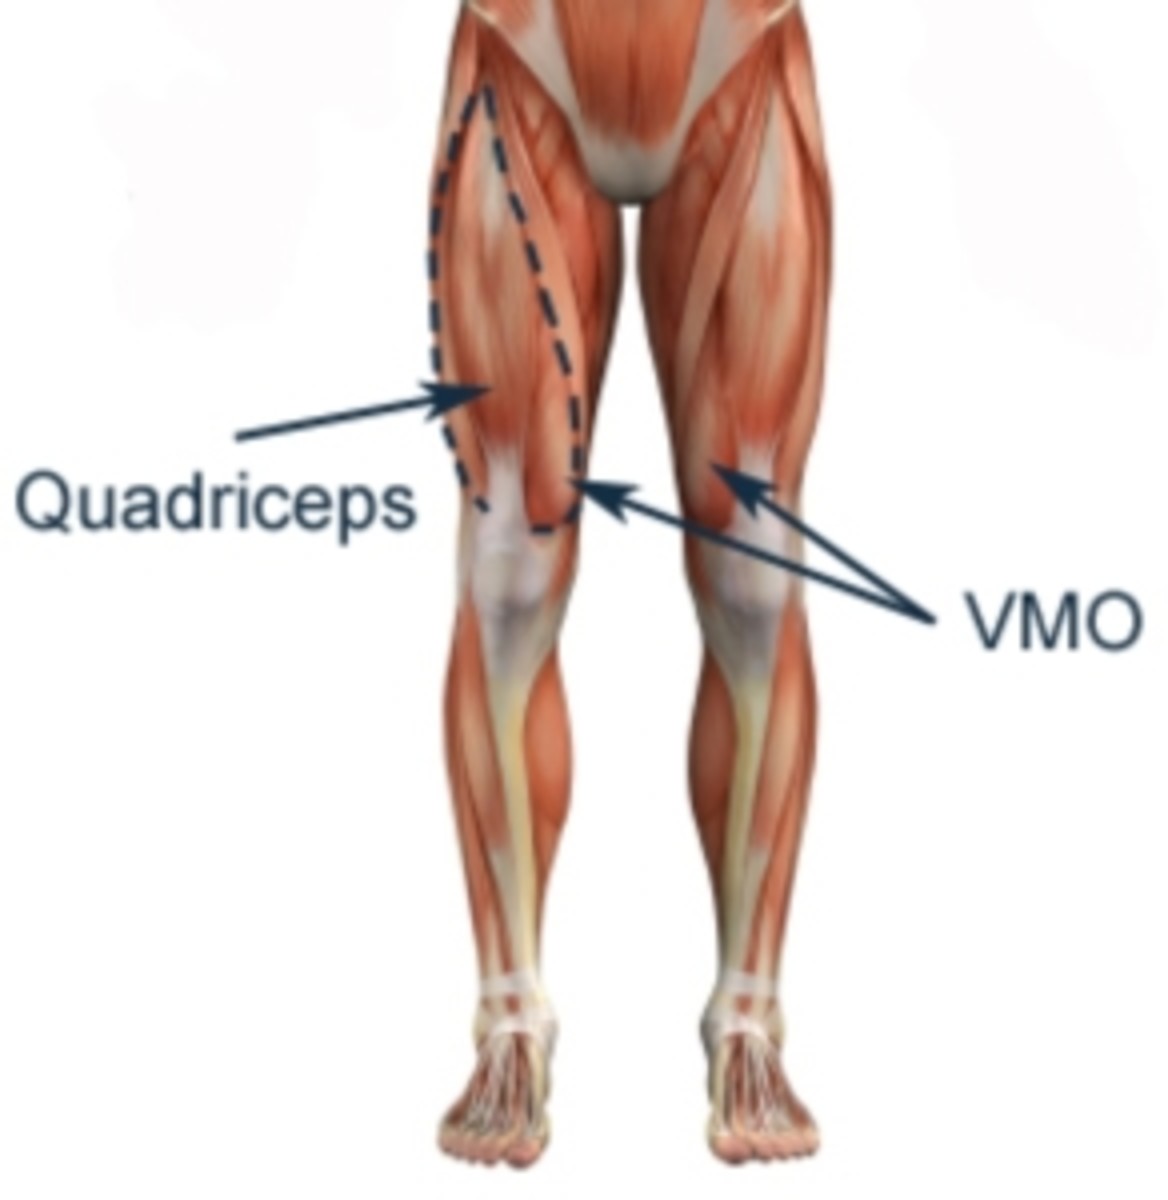 diagram of the human body showcasing the quadriceps and the VMO vastus medialis oblique